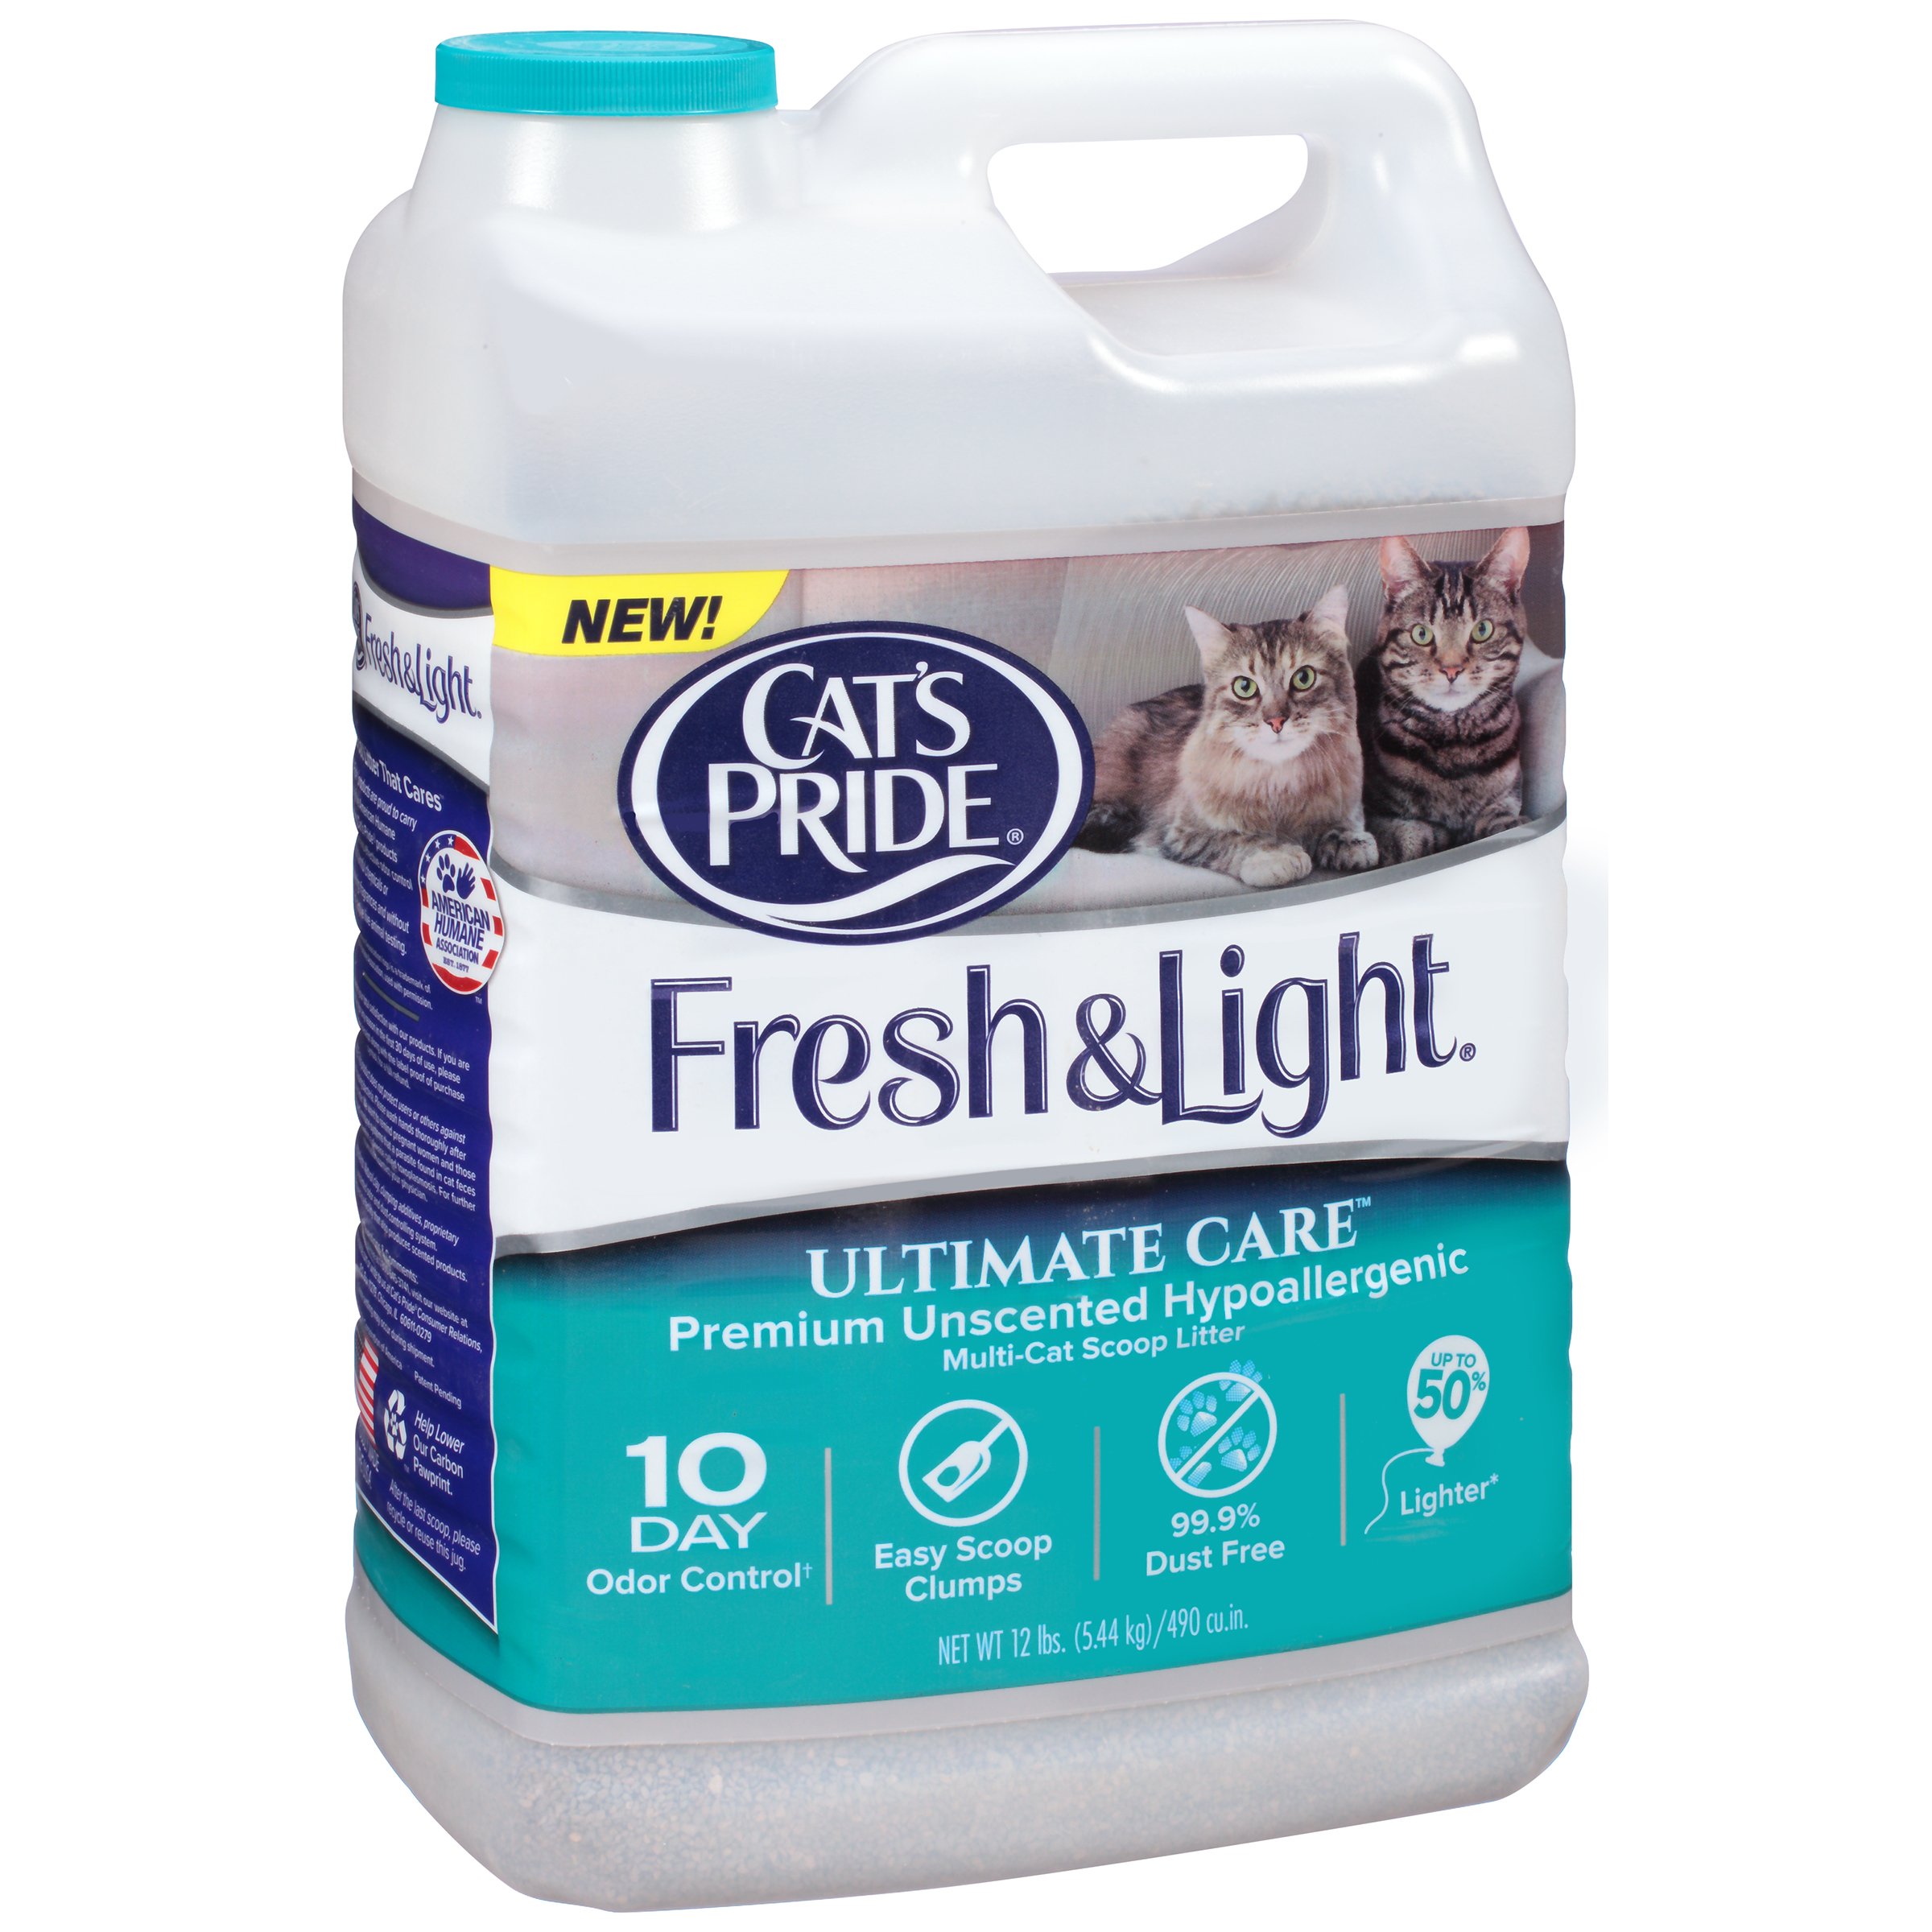 Cat's Pride Fresh & Light Litter Unscented Hypoallergenic Shop Cats